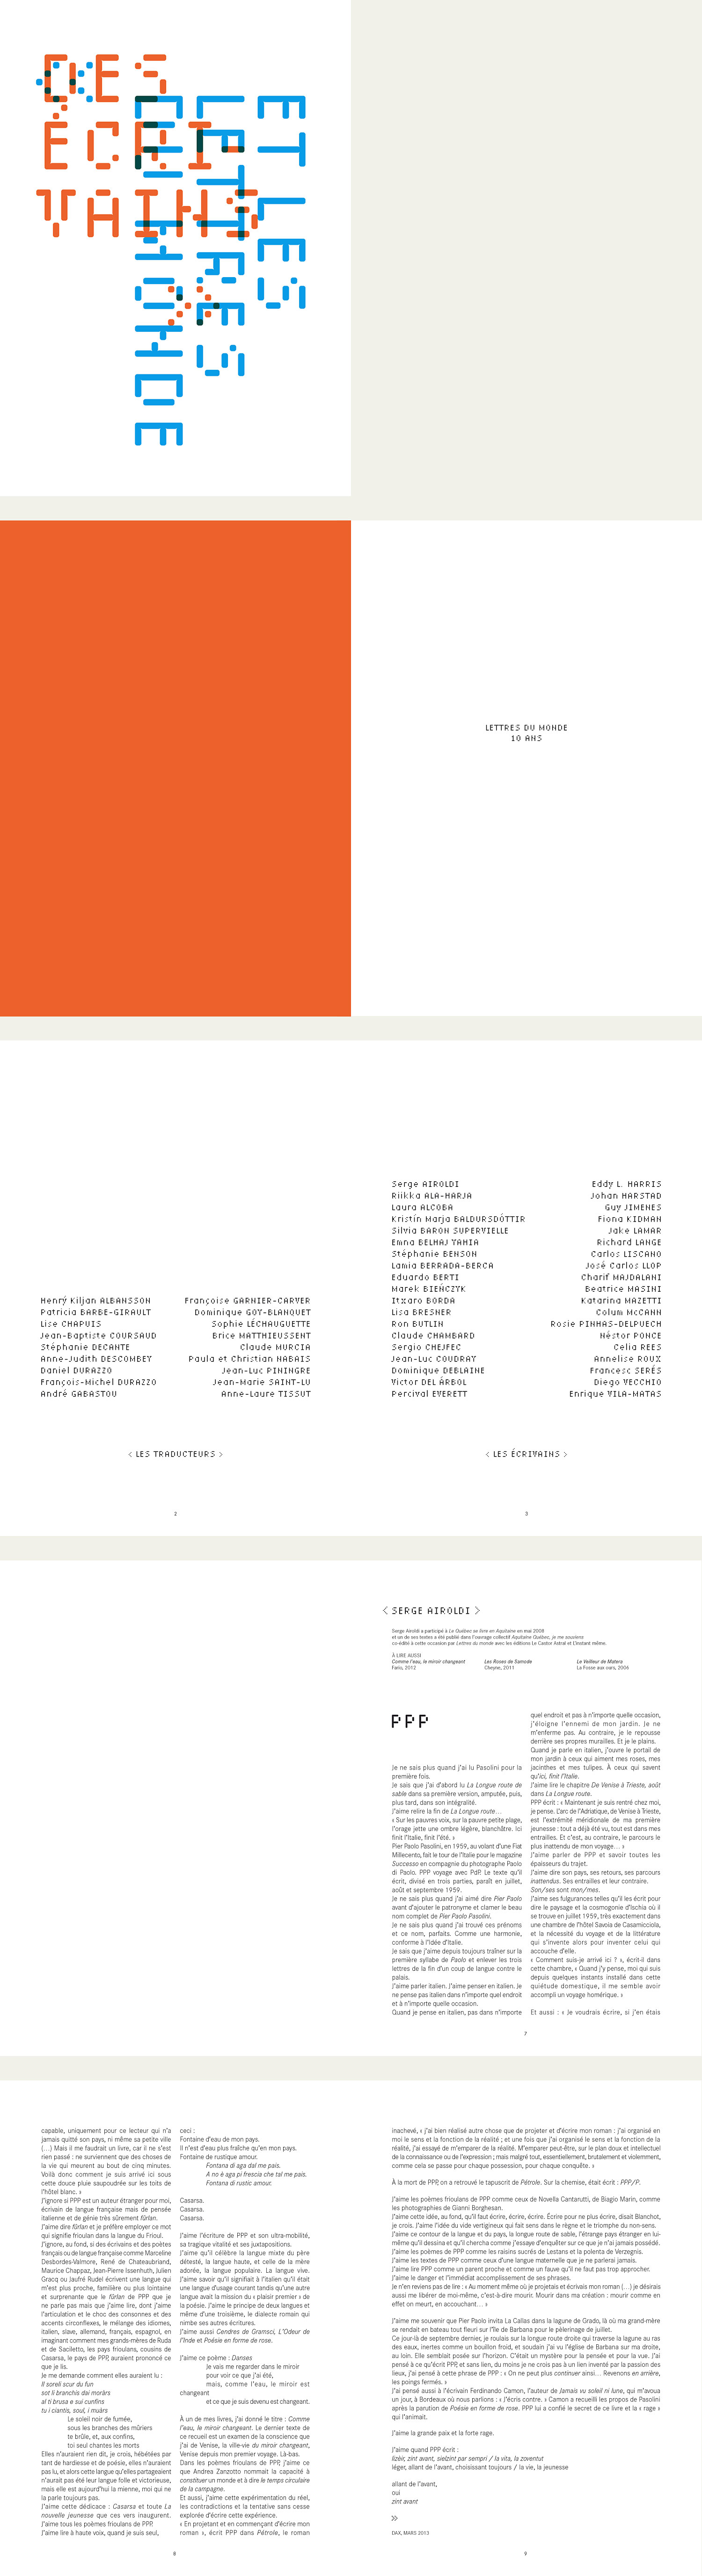 MrThornill-graphisme-lettres-du-monde-10eme-edition-2013-ph2